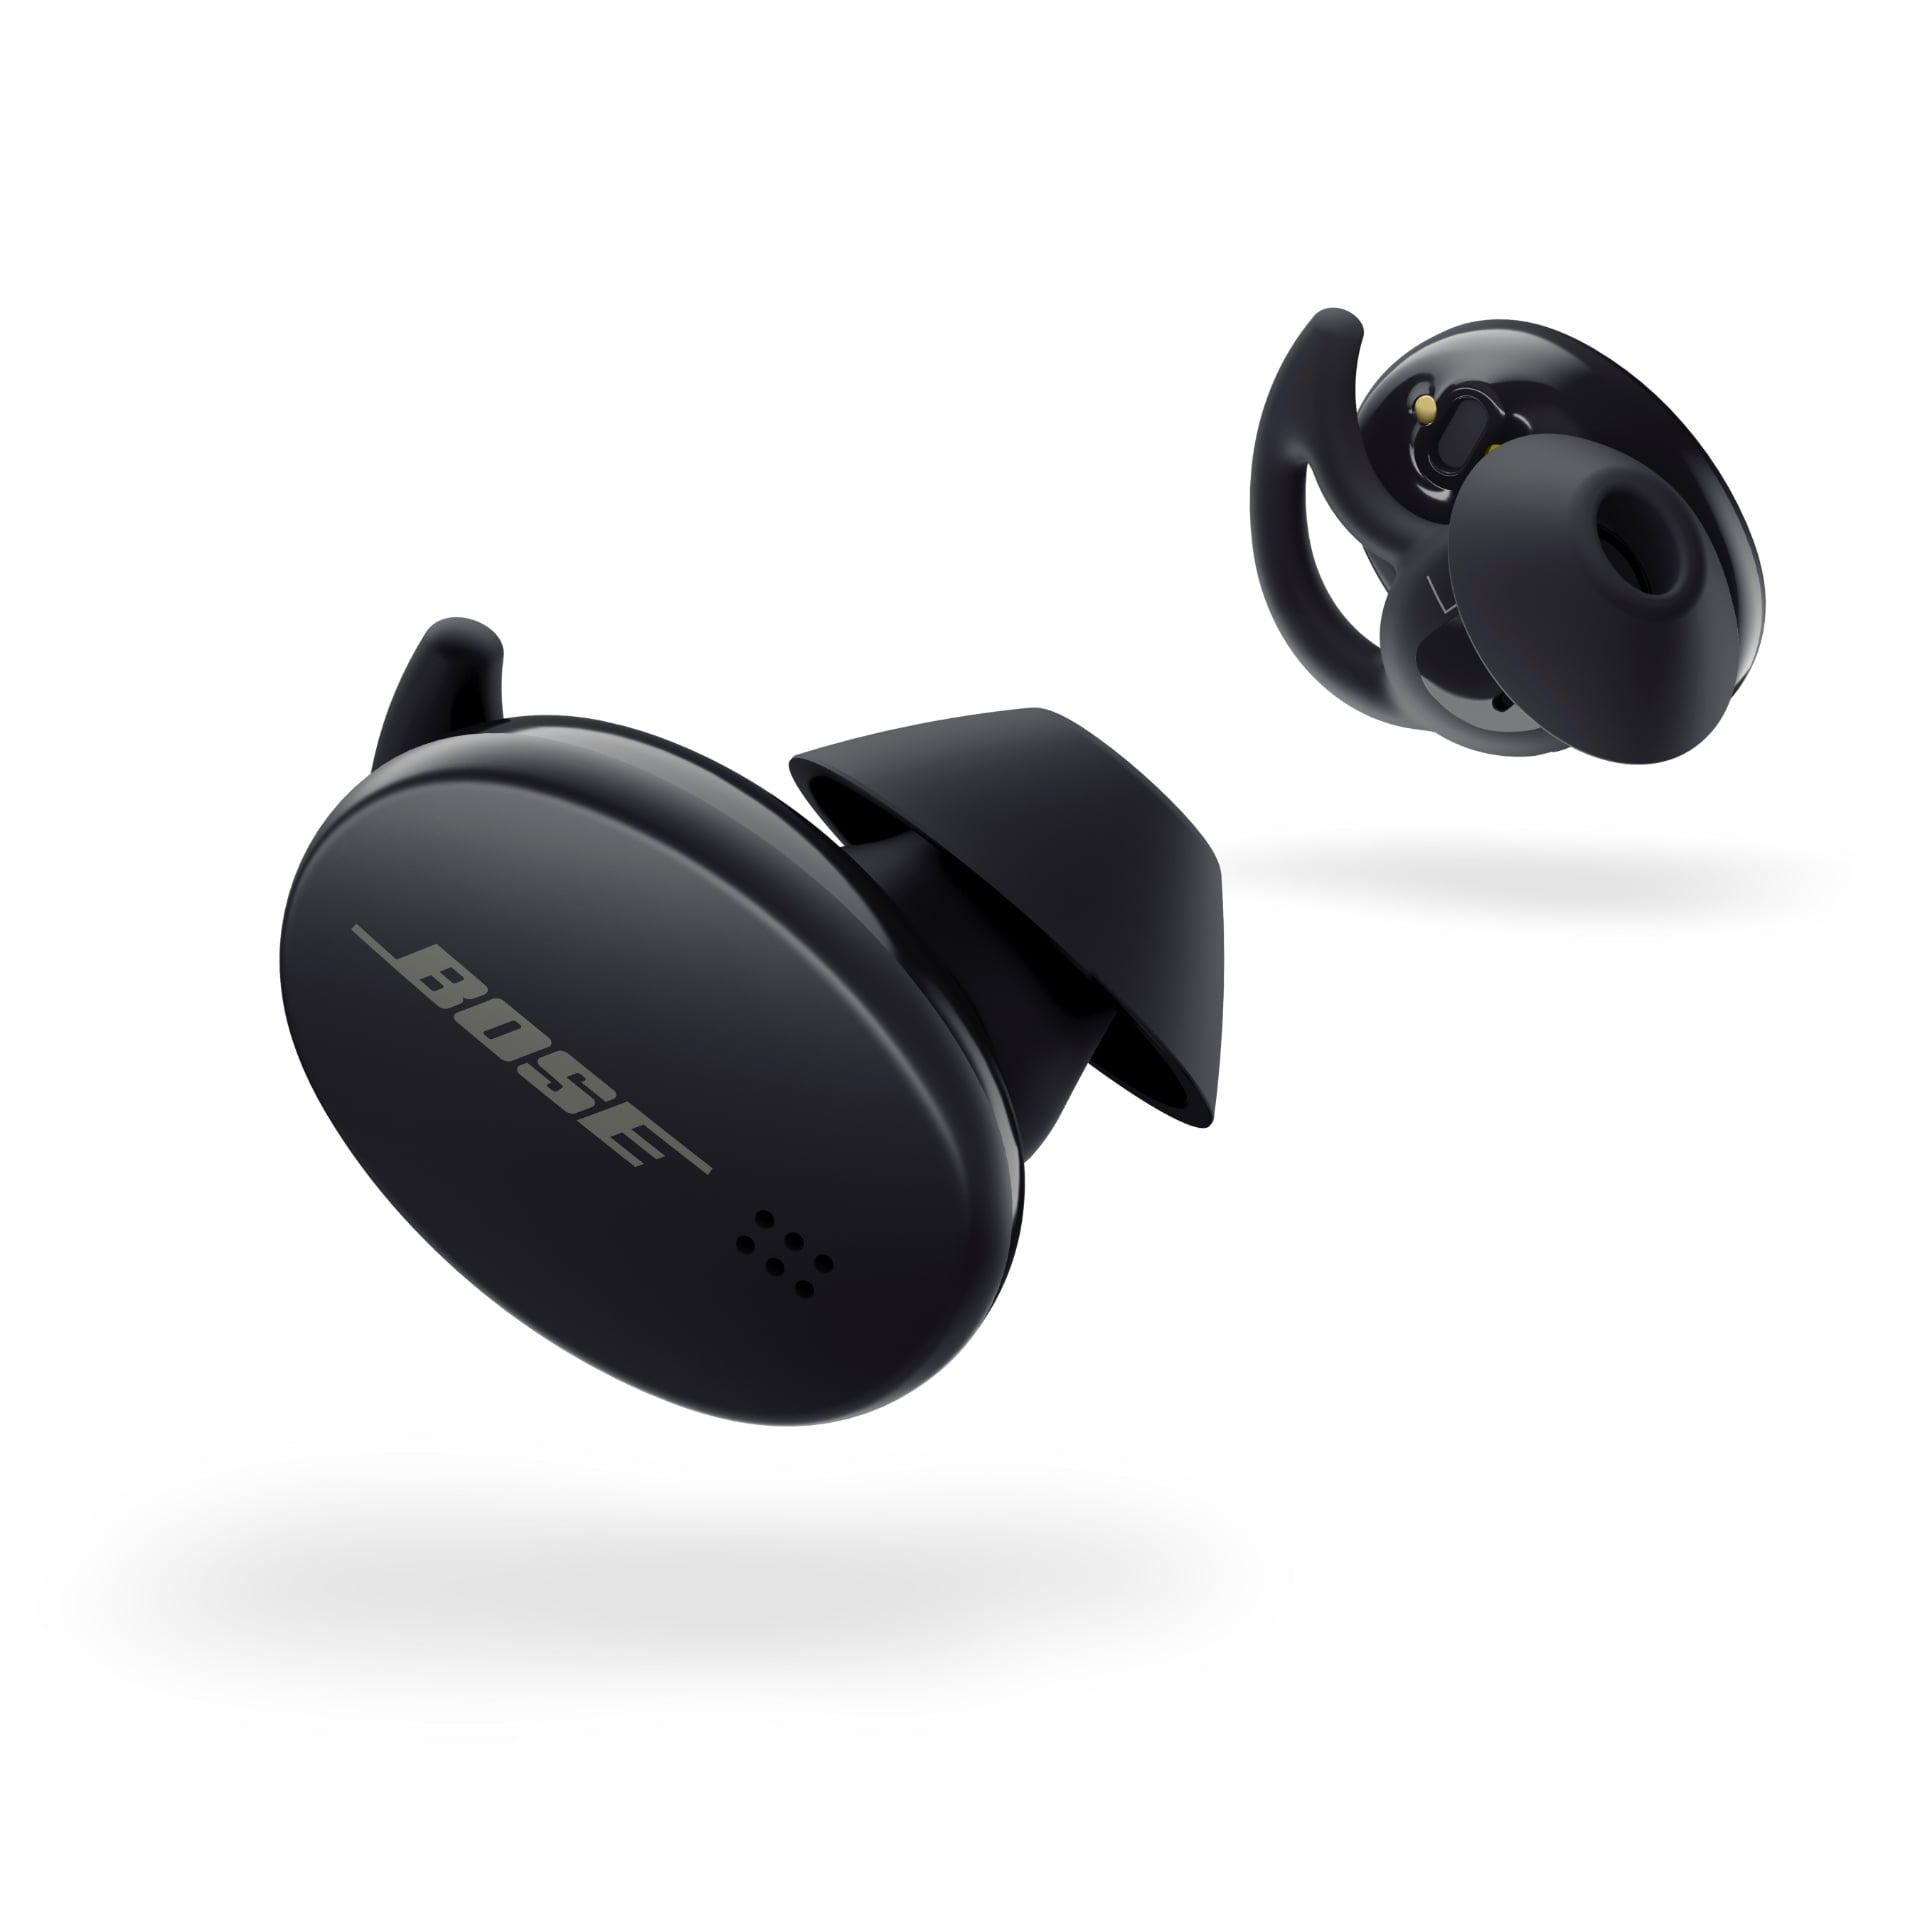 Technics EAH-AZ60-K True Wireless Earbuds (Black) - Walmart.com